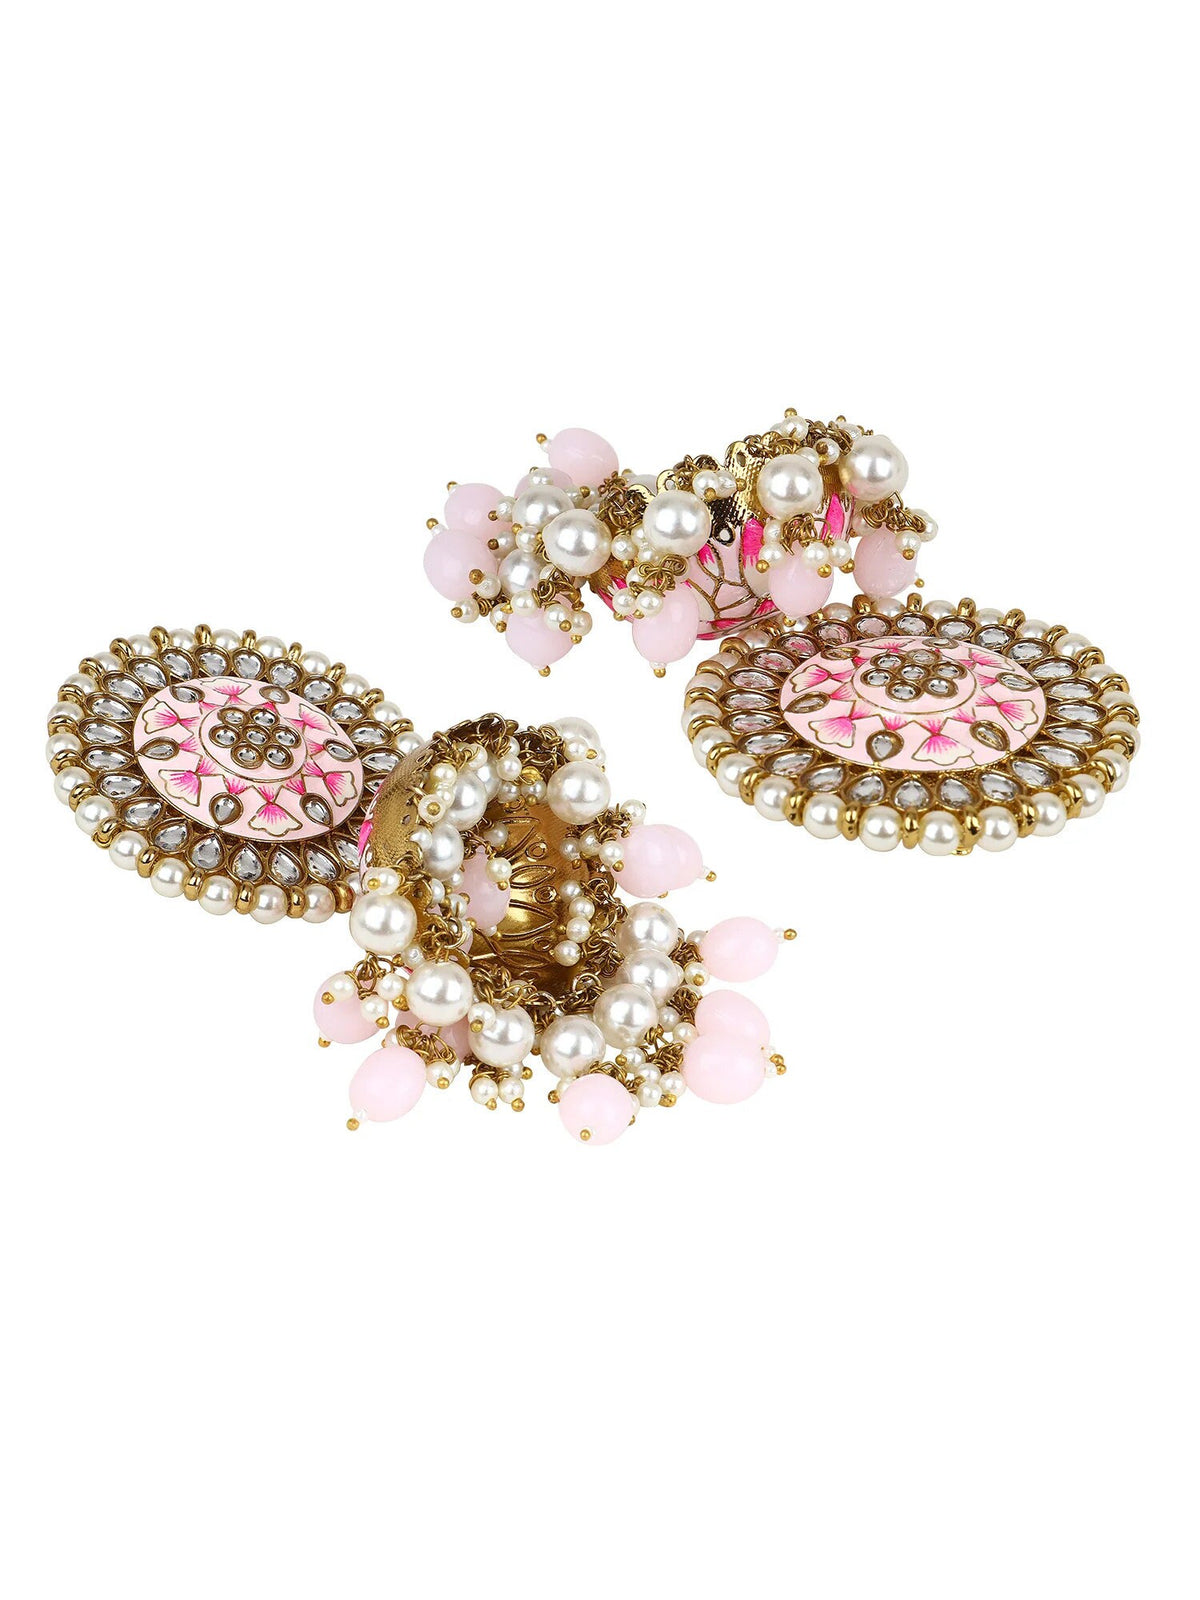 Meenakari Kundan Pearl Jhumka earrings, Pearl Jhumka, Bollywood Earrings, Pakistani Earrings, Kundan Jhumka, Punjabi Jewelry, Jhumkas